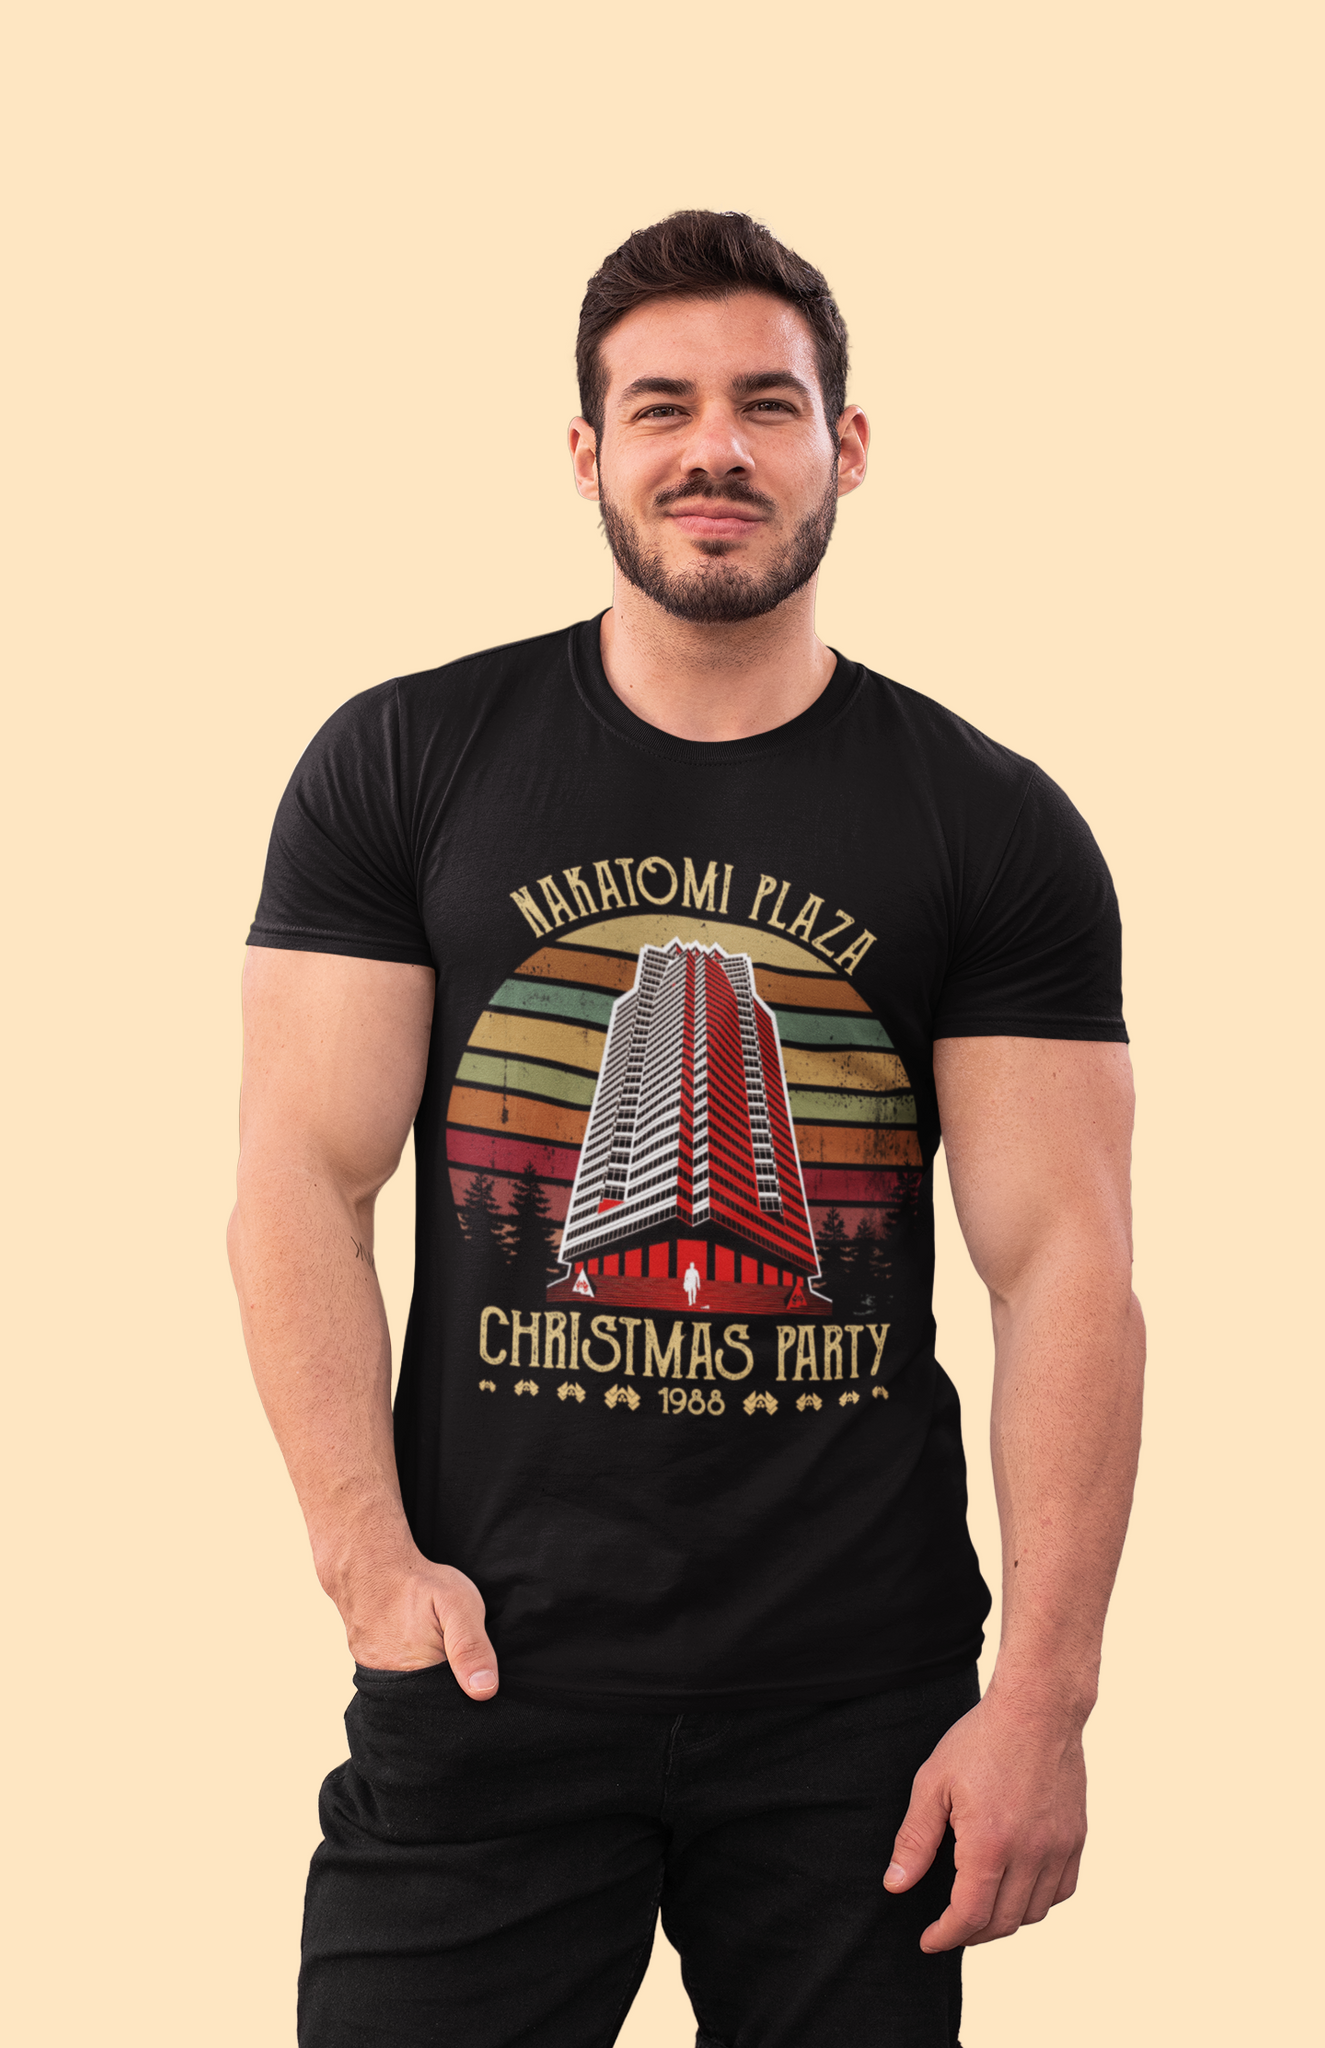 Die Hard Vintage T Shirt, Nakatomi Plaza T Shirt, Nakatomi Plaza Christmas Party 1988 Tshirt, Christmas Gifts